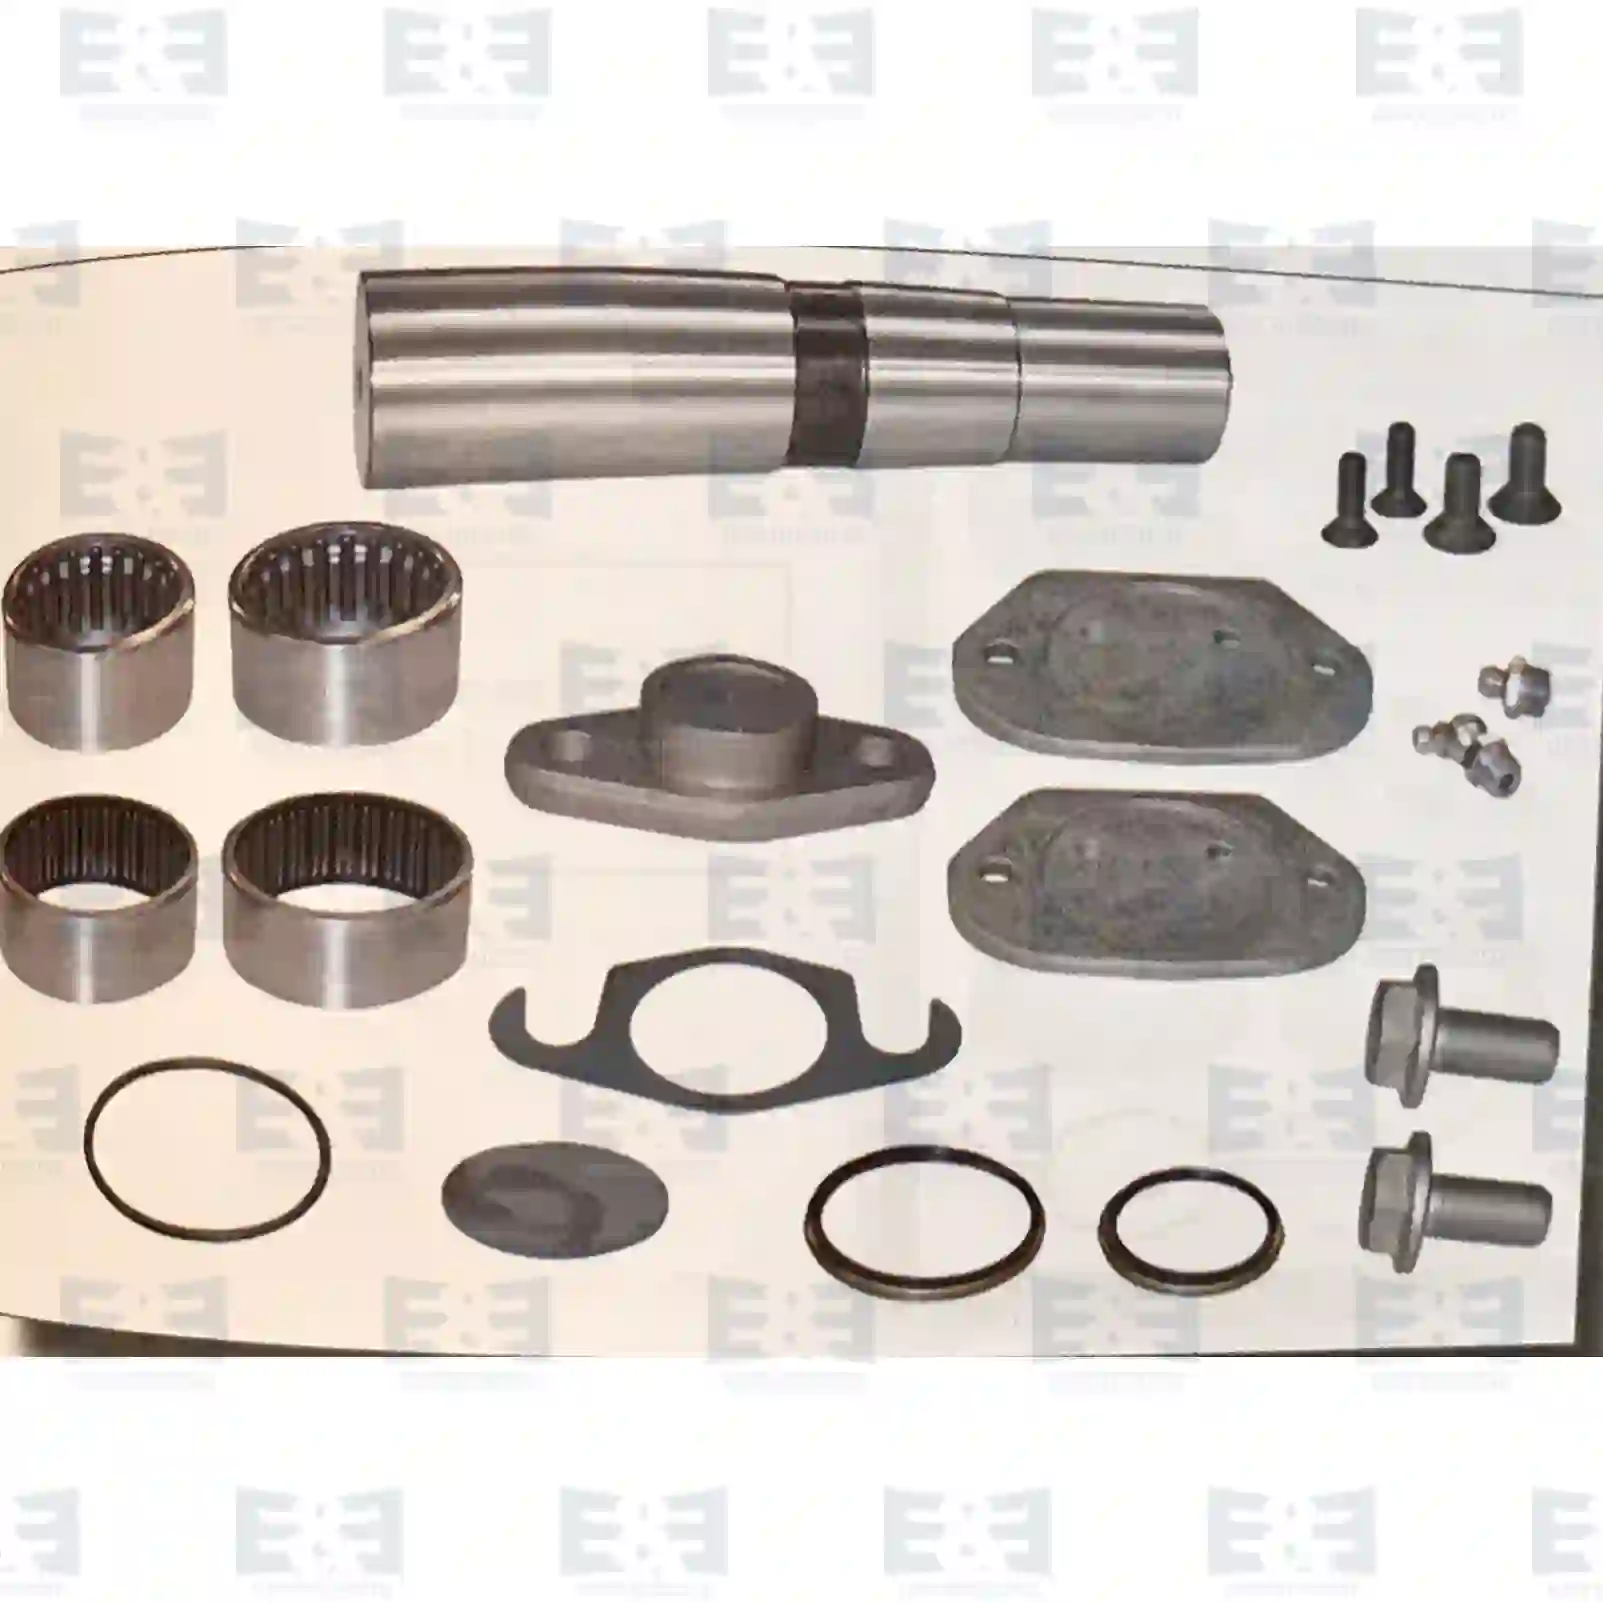  King pin kit, left || E&E Truck Spare Parts | Truck Spare Parts, Auotomotive Spare Parts